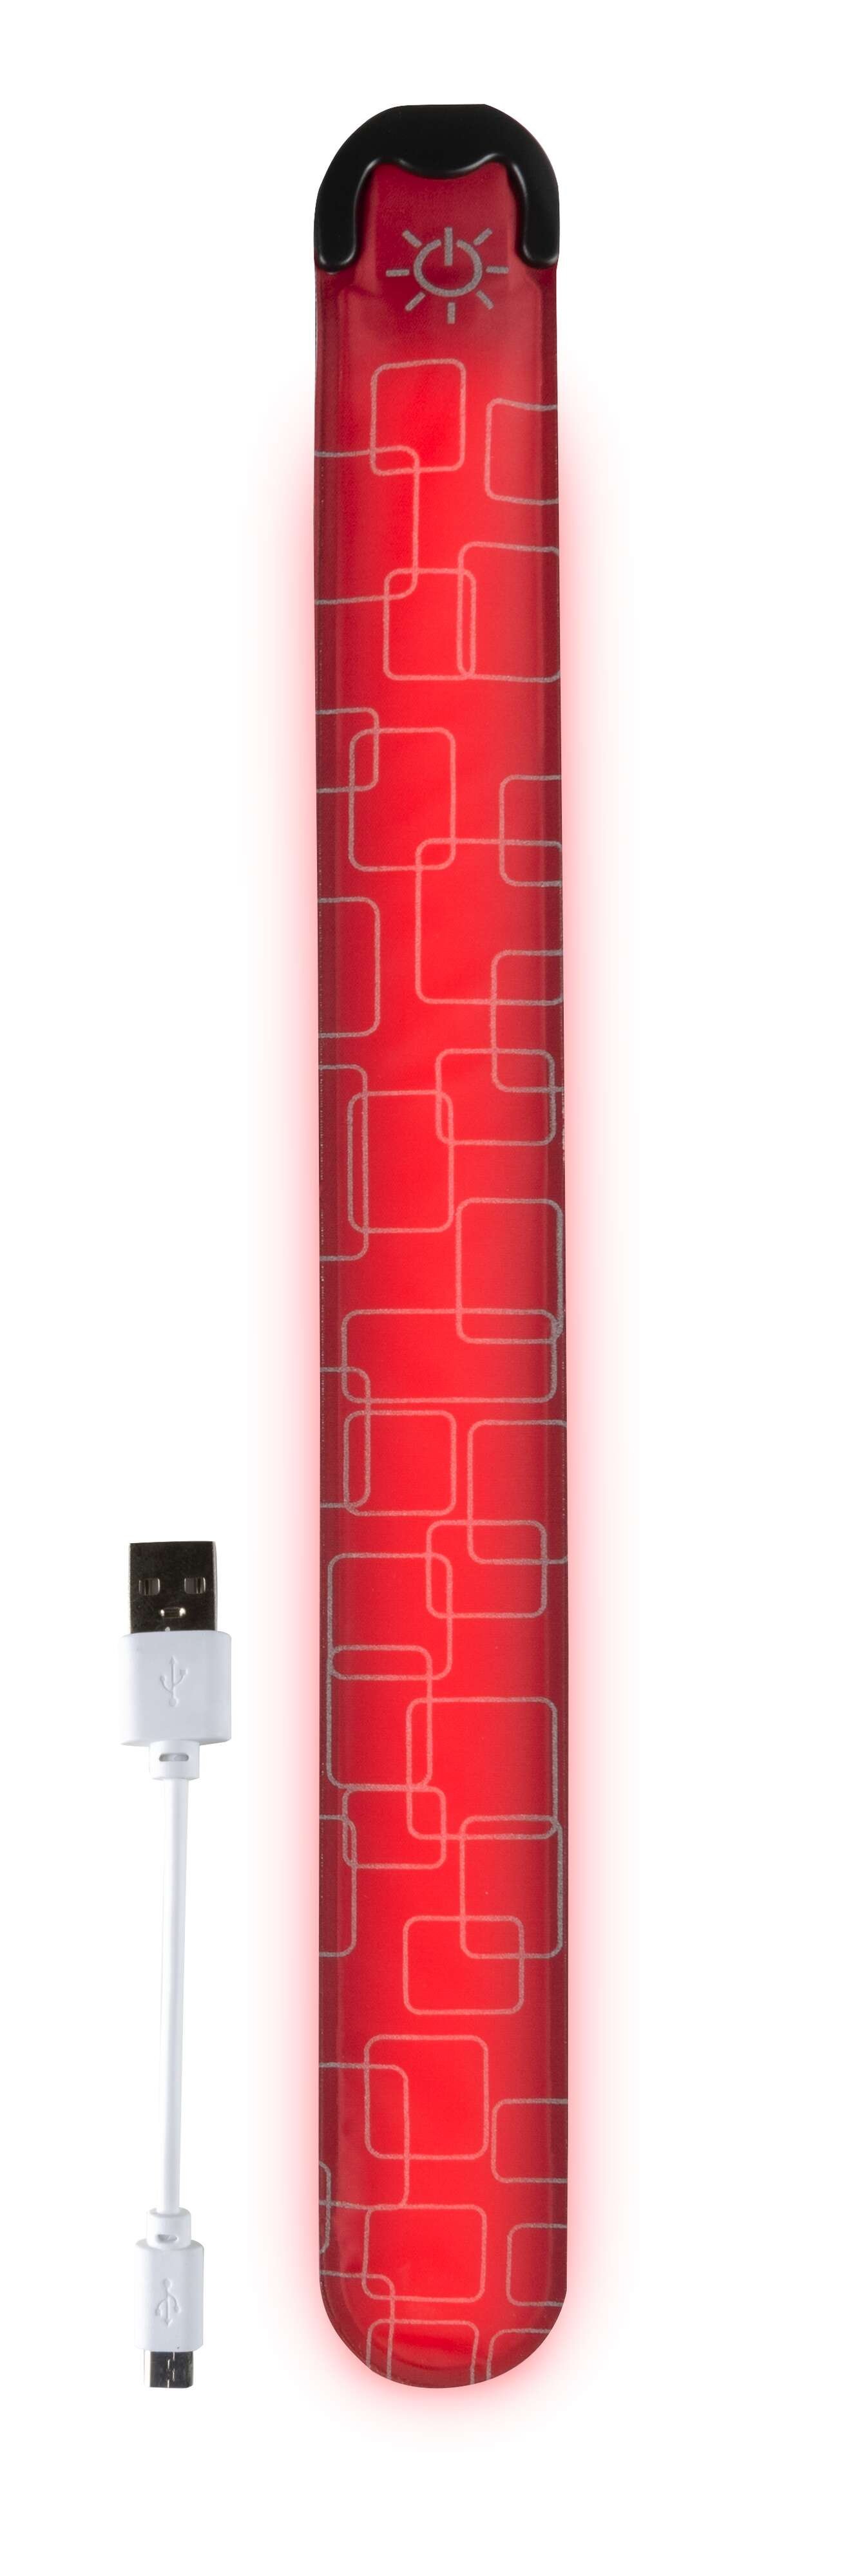 LED slap wrap, lichtgevende slap wrap met USB oplaadmogelijkheid 36x3,5 cm rood